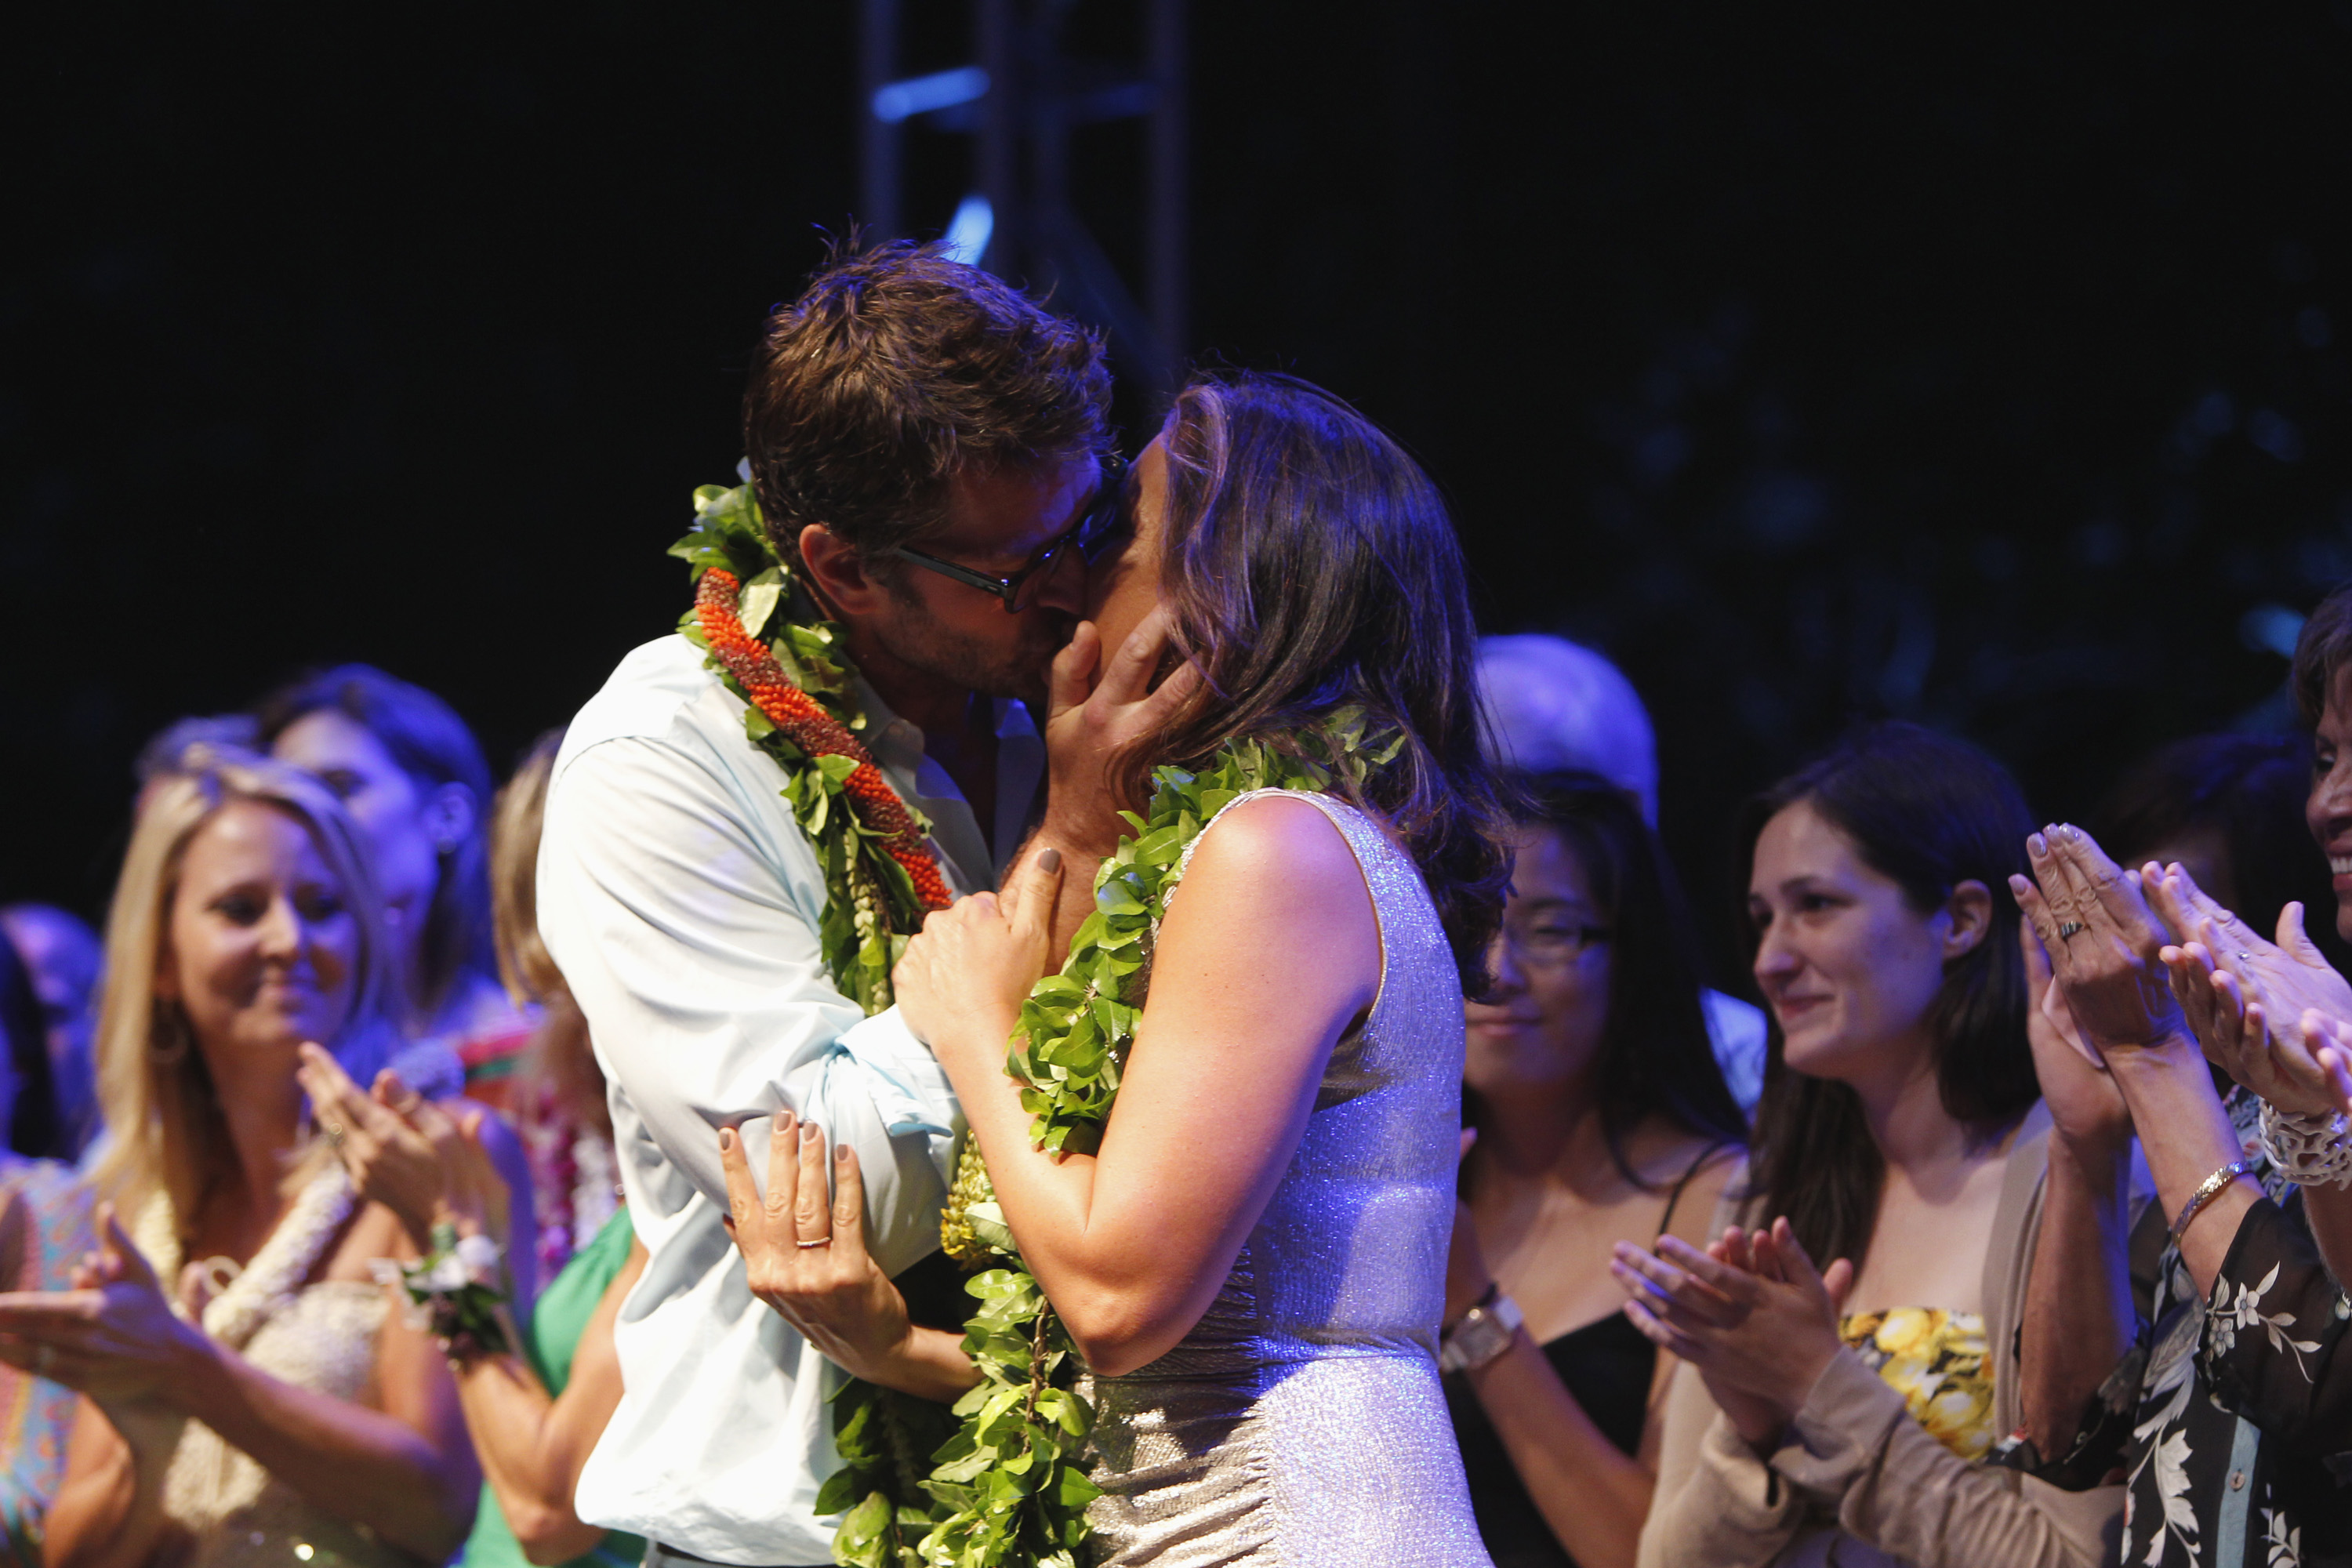 Peter Hermann et Mariska Hargitay partageant un baiser lors du gala inaugural Joyful Mele à Honolulu, 2012 | Source : Getty Images